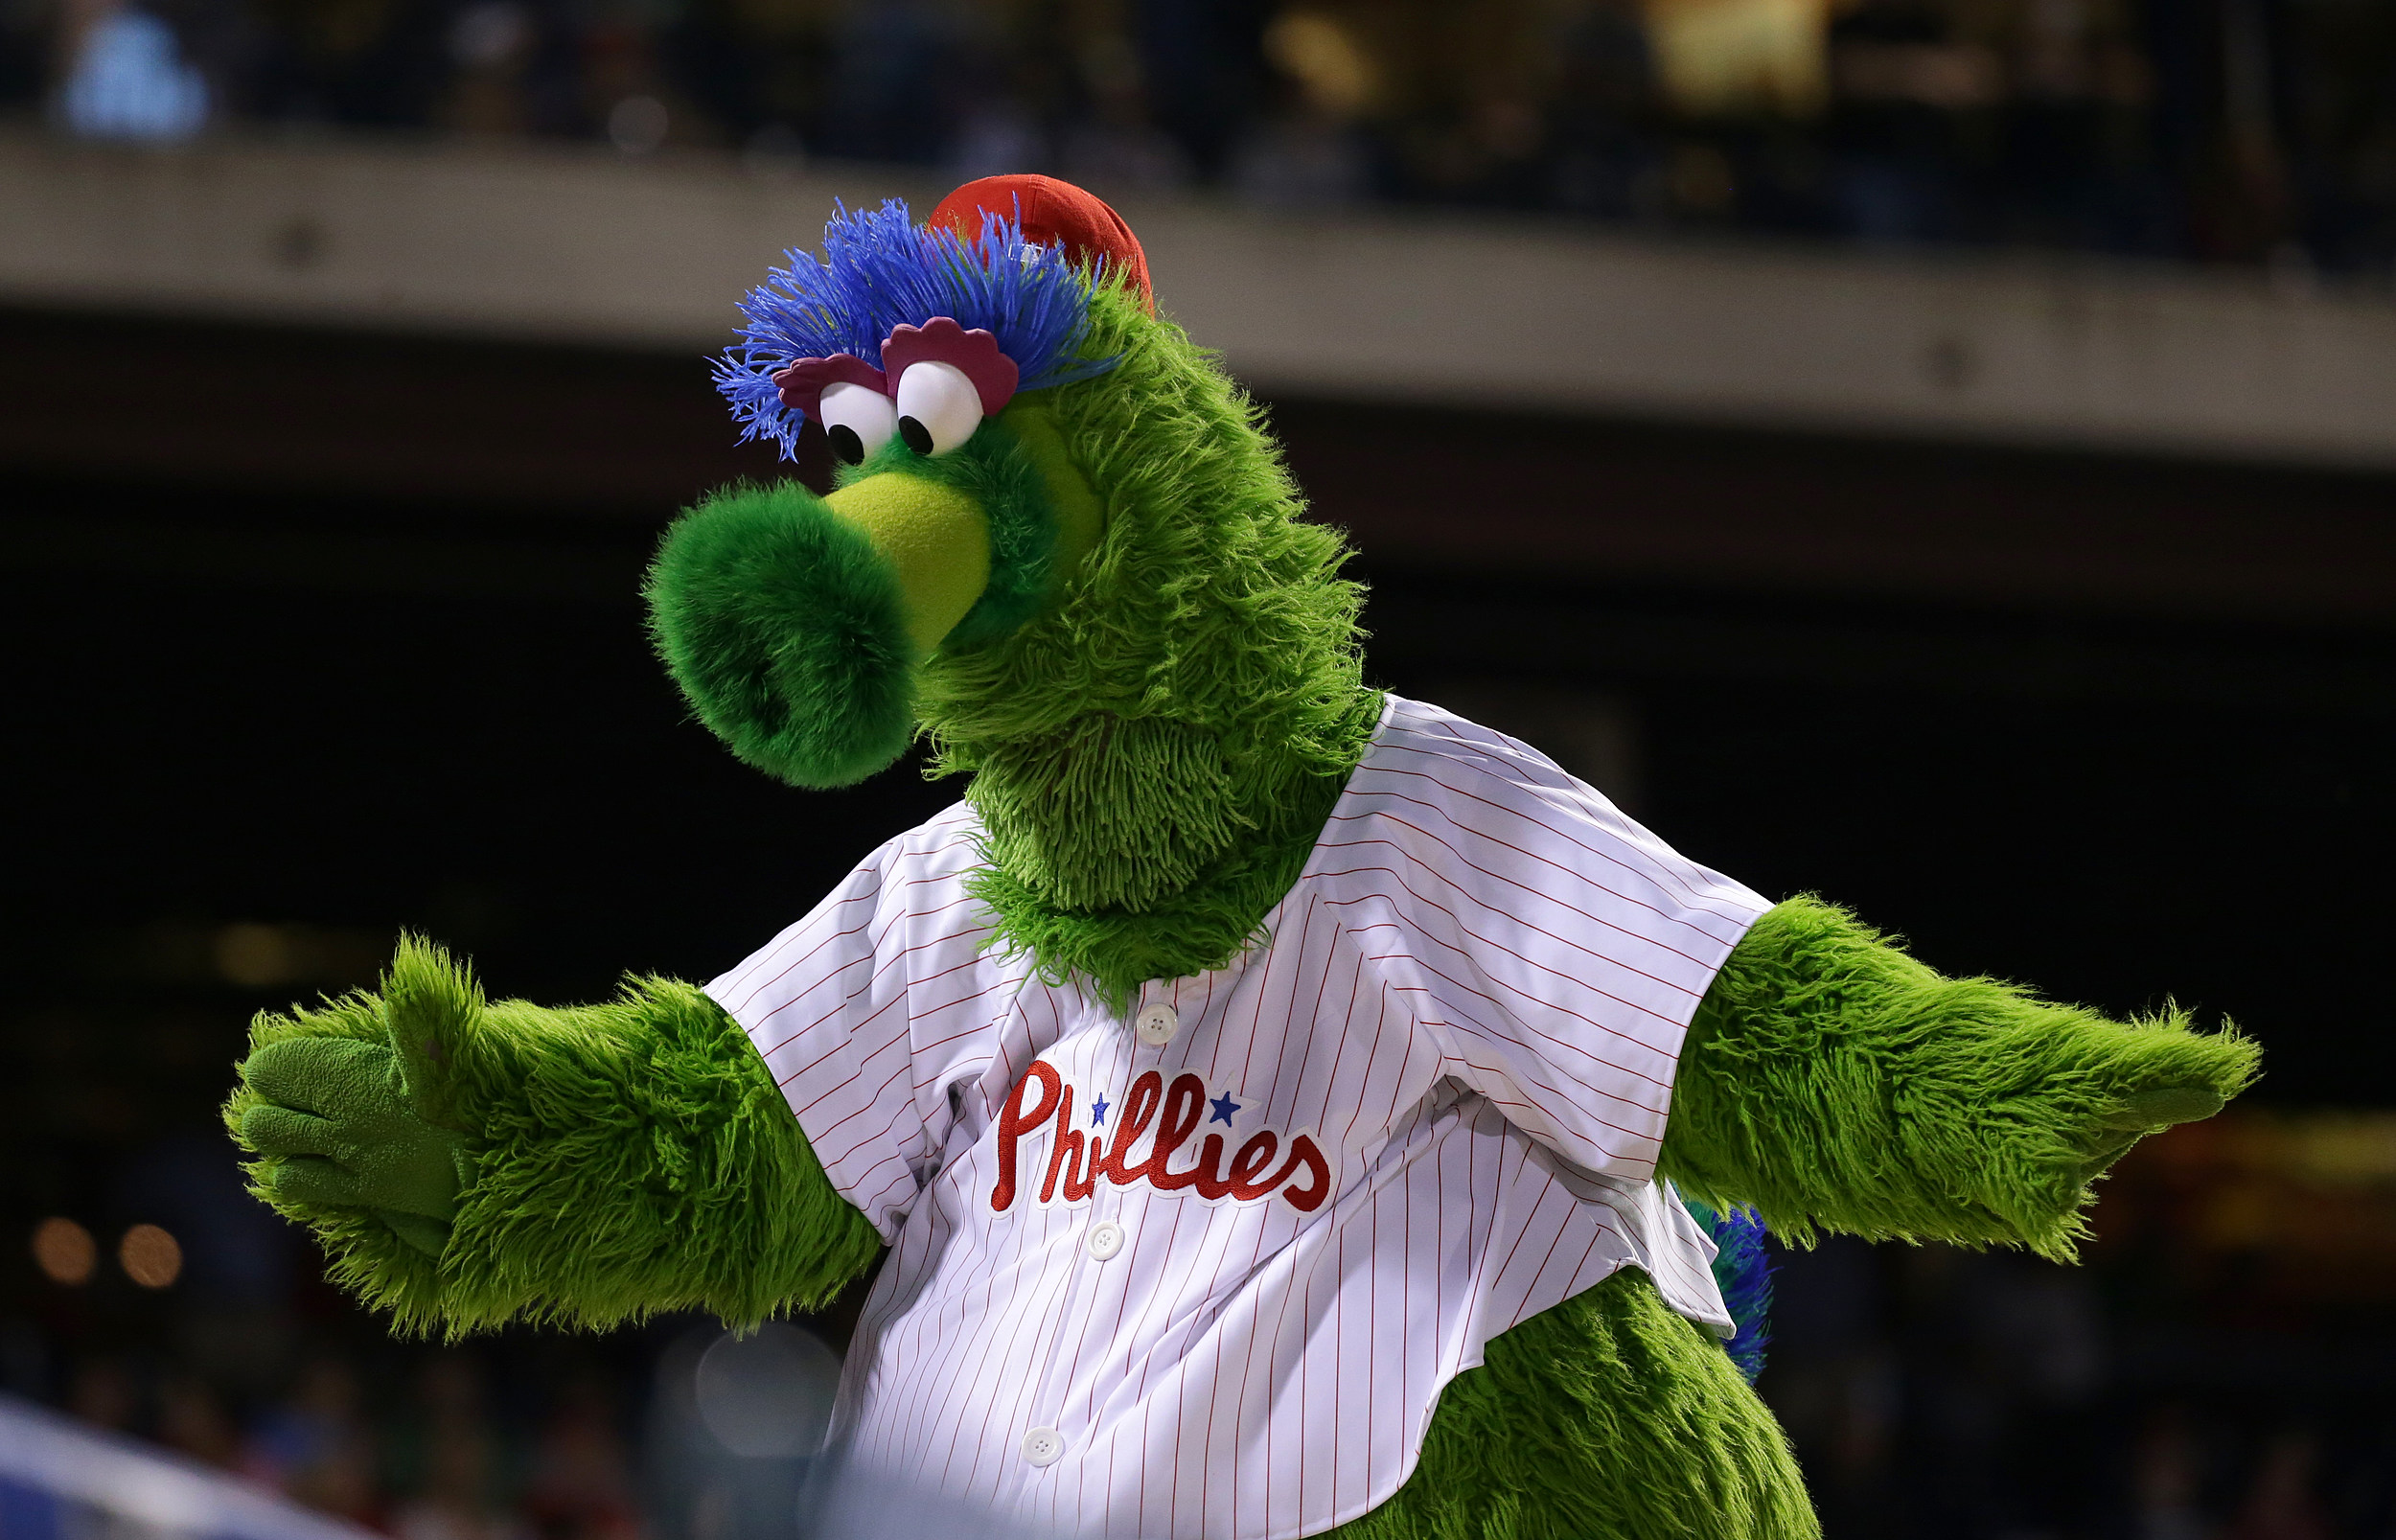 Where Does the Phillie Phanatic Rank Among MLB Mascots?